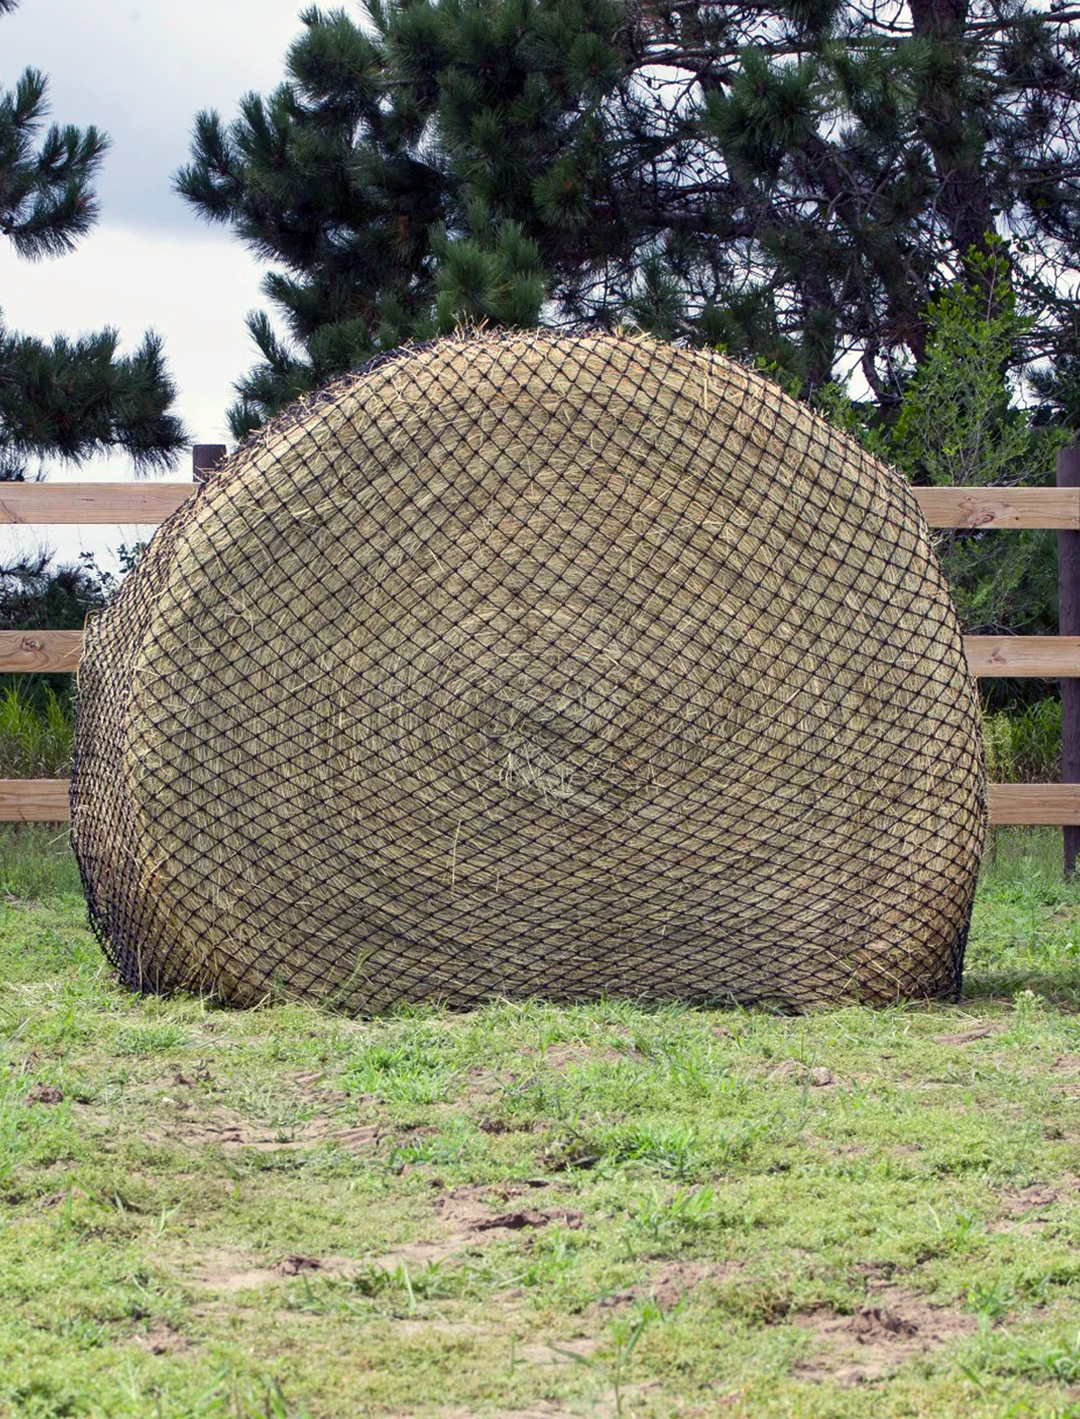 <img src="haynet.jpg" alt="Round bale hay net" />